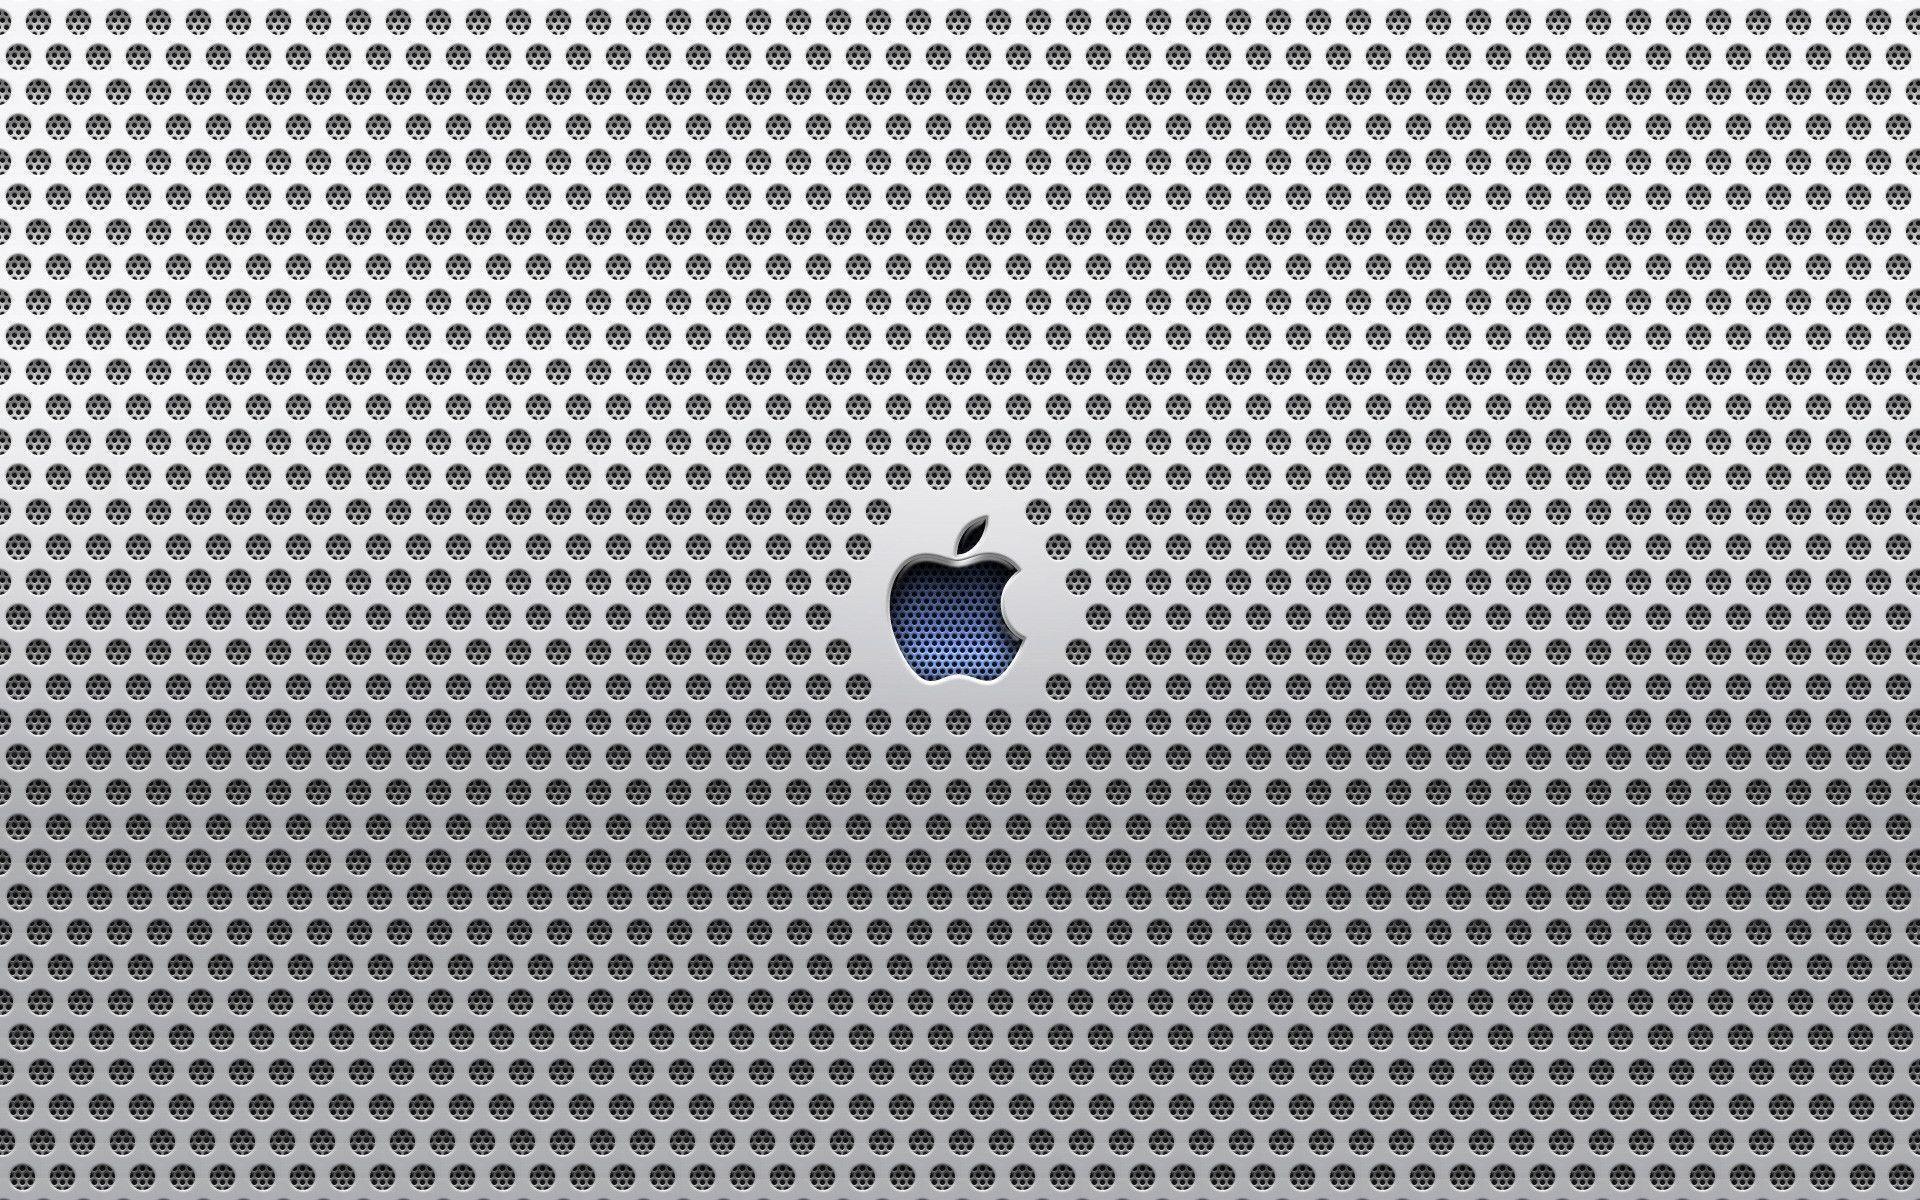 Apple iPhone wallpaper